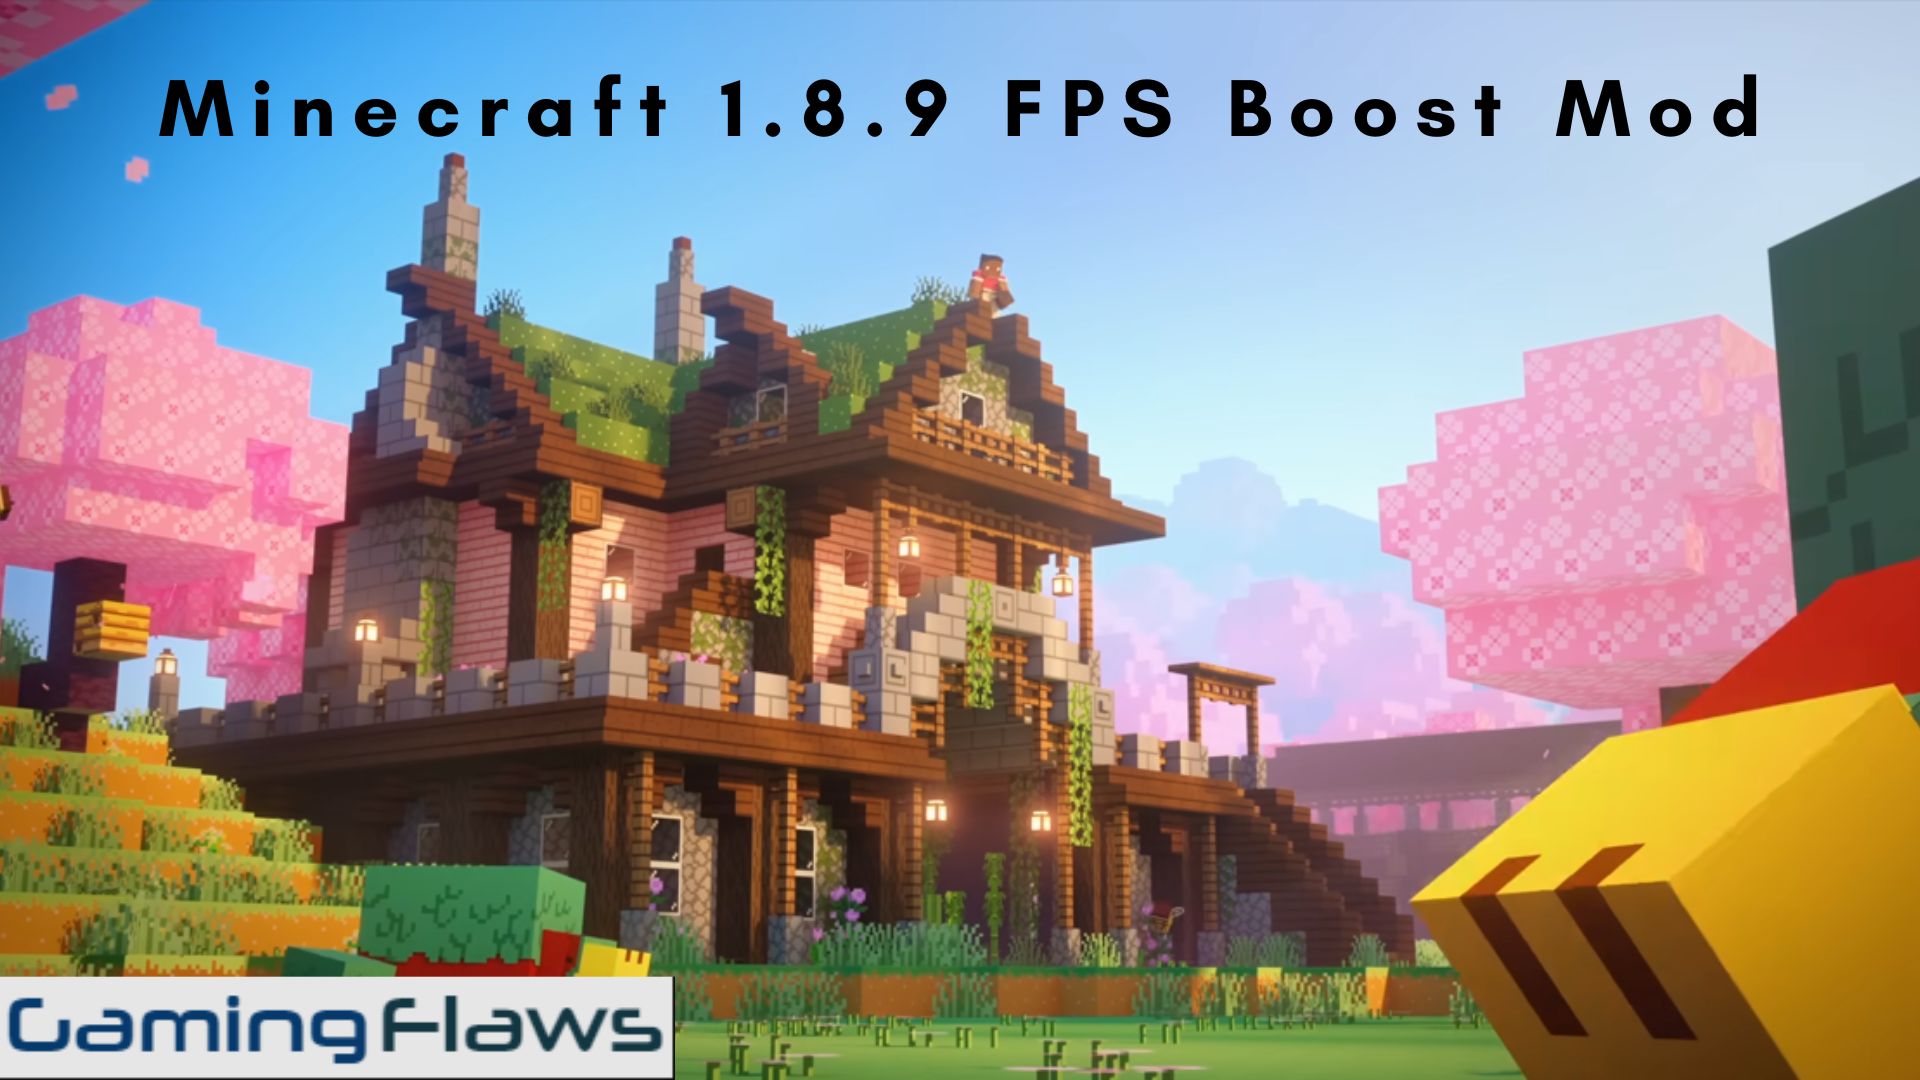 Minecraft 1.8.9 fps boost mod